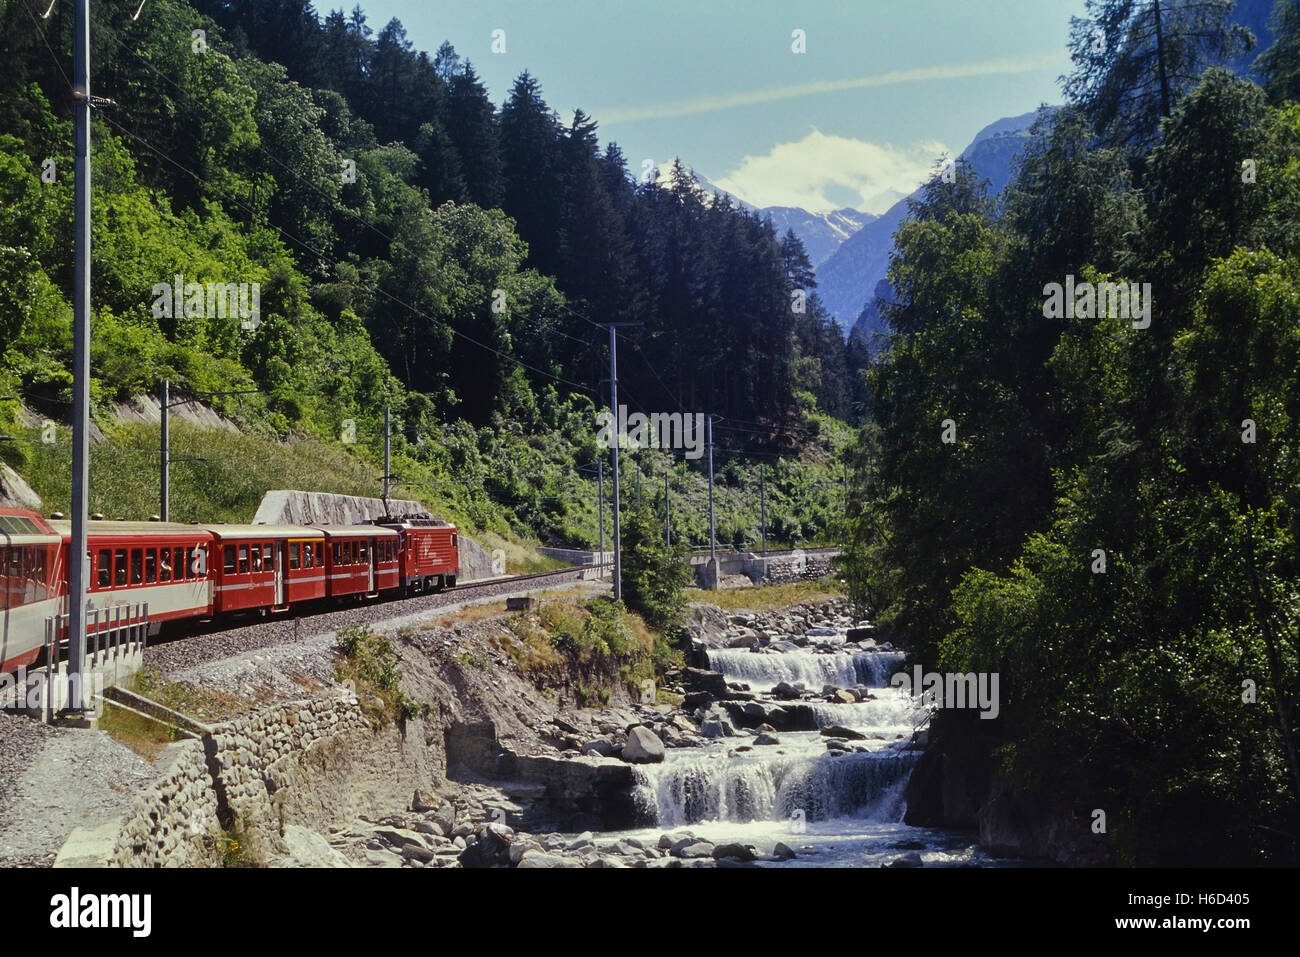 Matterhorn Gotthard Bahn railway. Switzerland Stock Photo